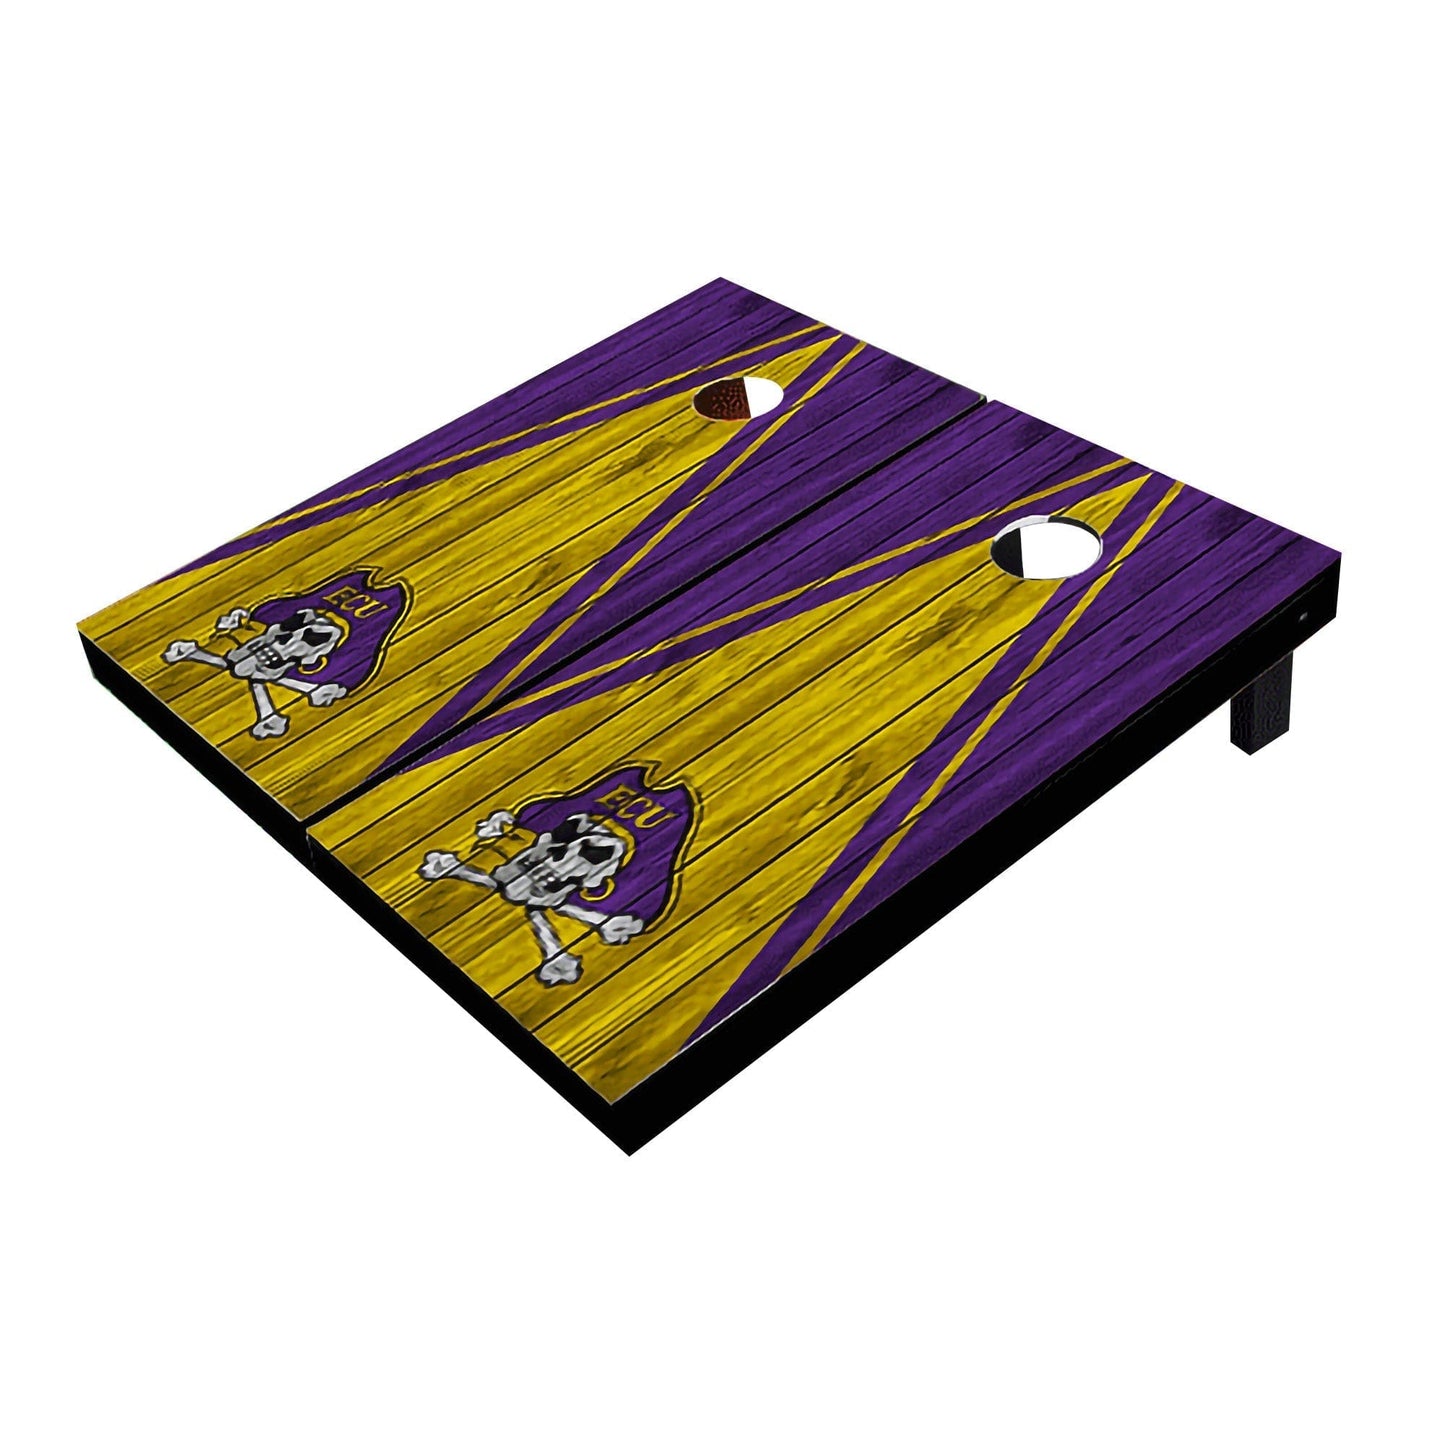 Eastern Carolina ECU Pirates Yellow and Purple Matching Triangle All-Weather Cornhole Boards